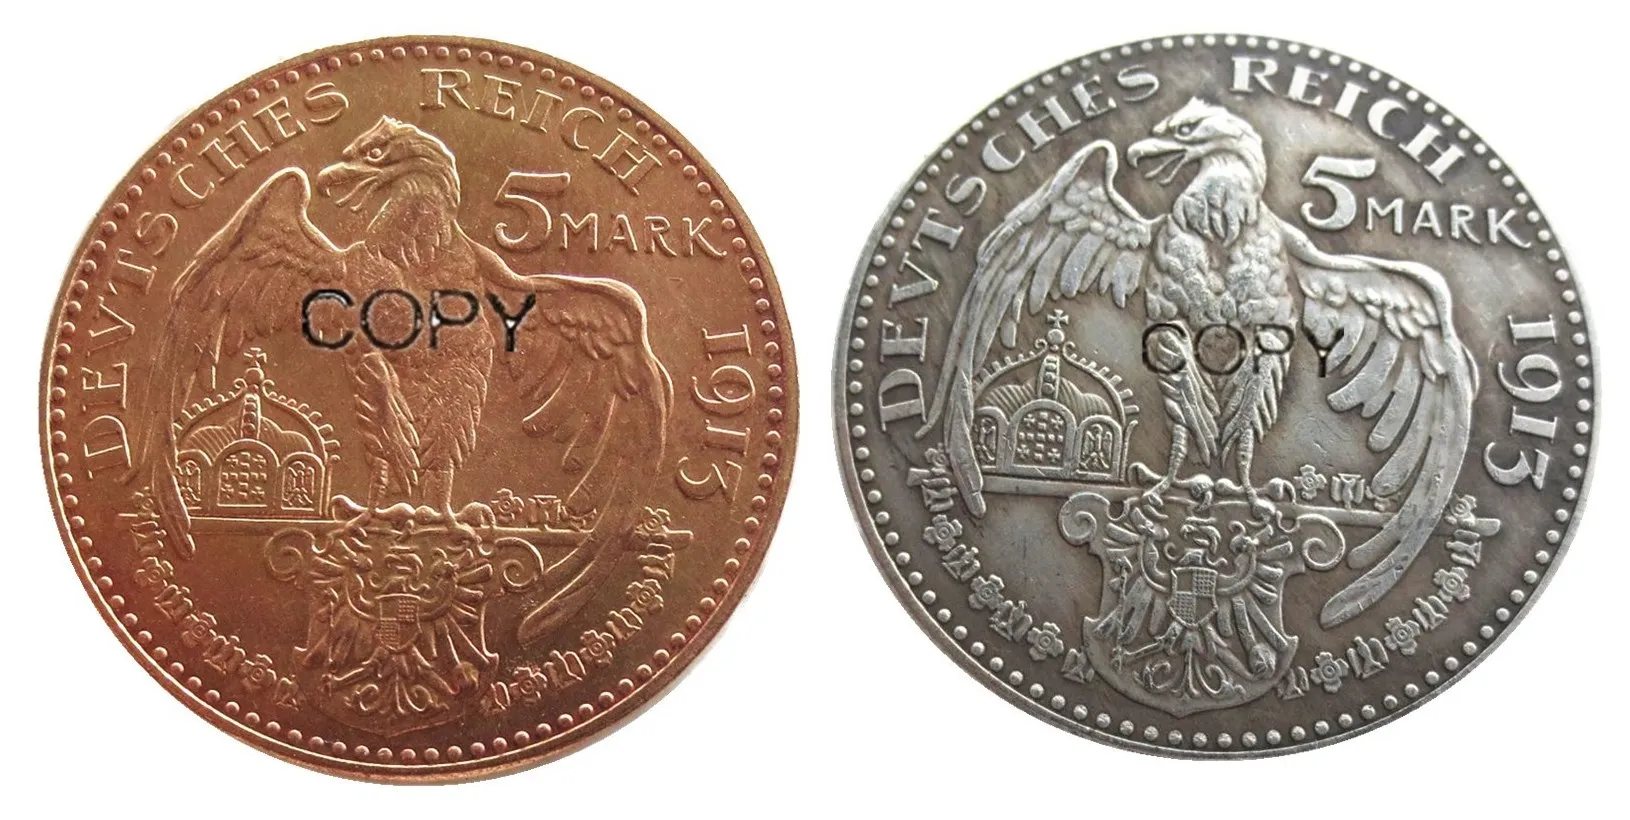 НЕМЕЦКАЯ монета-копия 1913 CU Pattern 5 Mark German ST Bavaria Ludwig III из 100% меди/ серебра с покрытием - 2